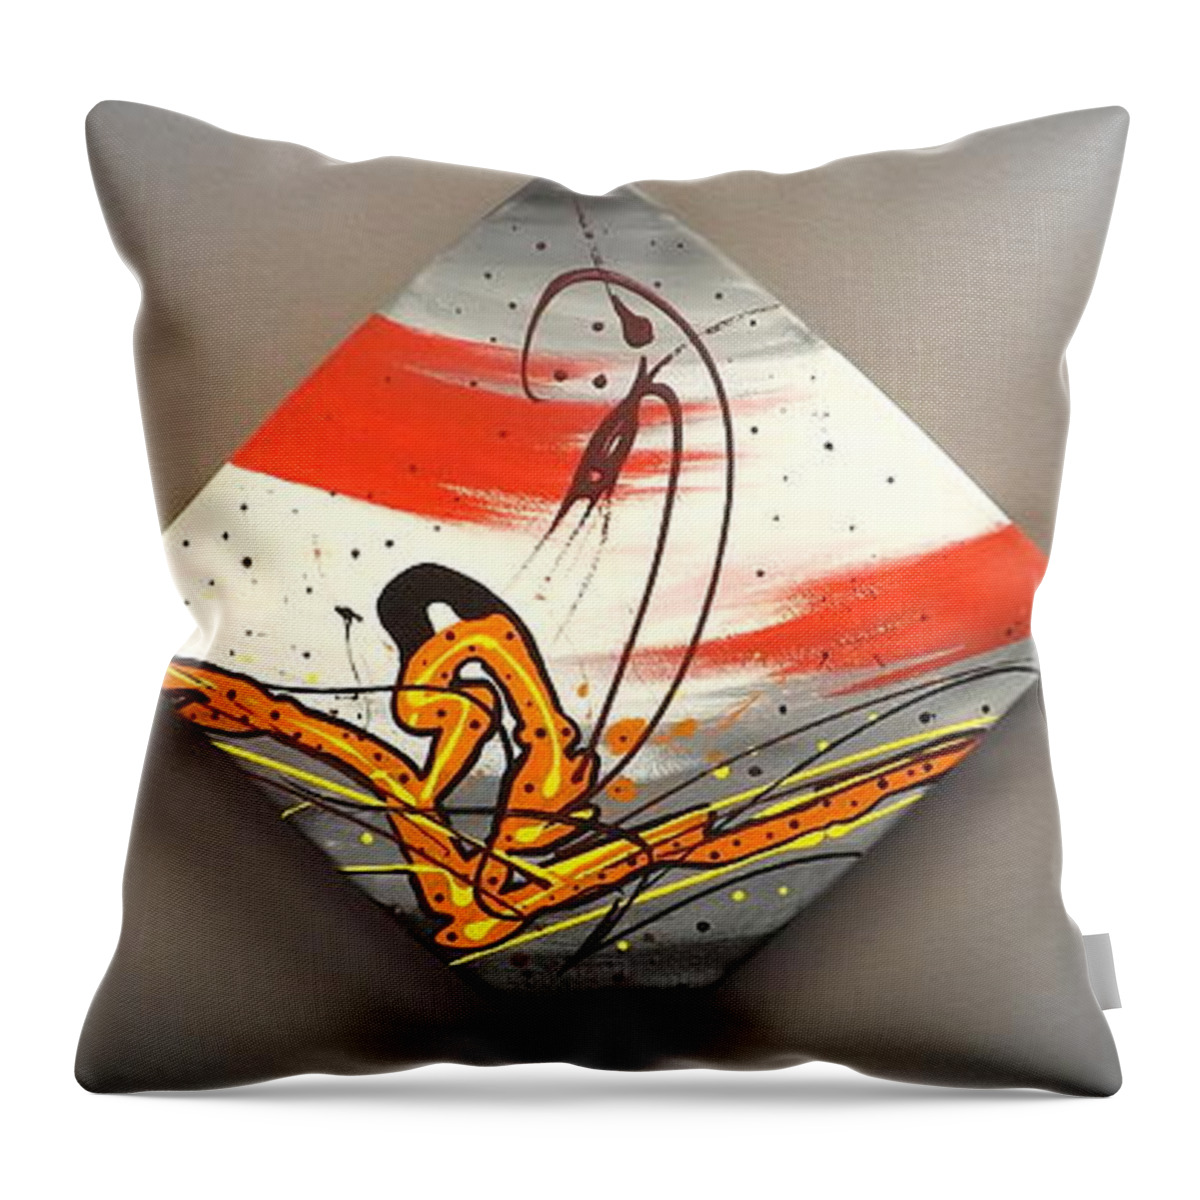 Windsurfer Throw Pillow featuring the painting Windsurfer Spotlighted by Darren Robinson